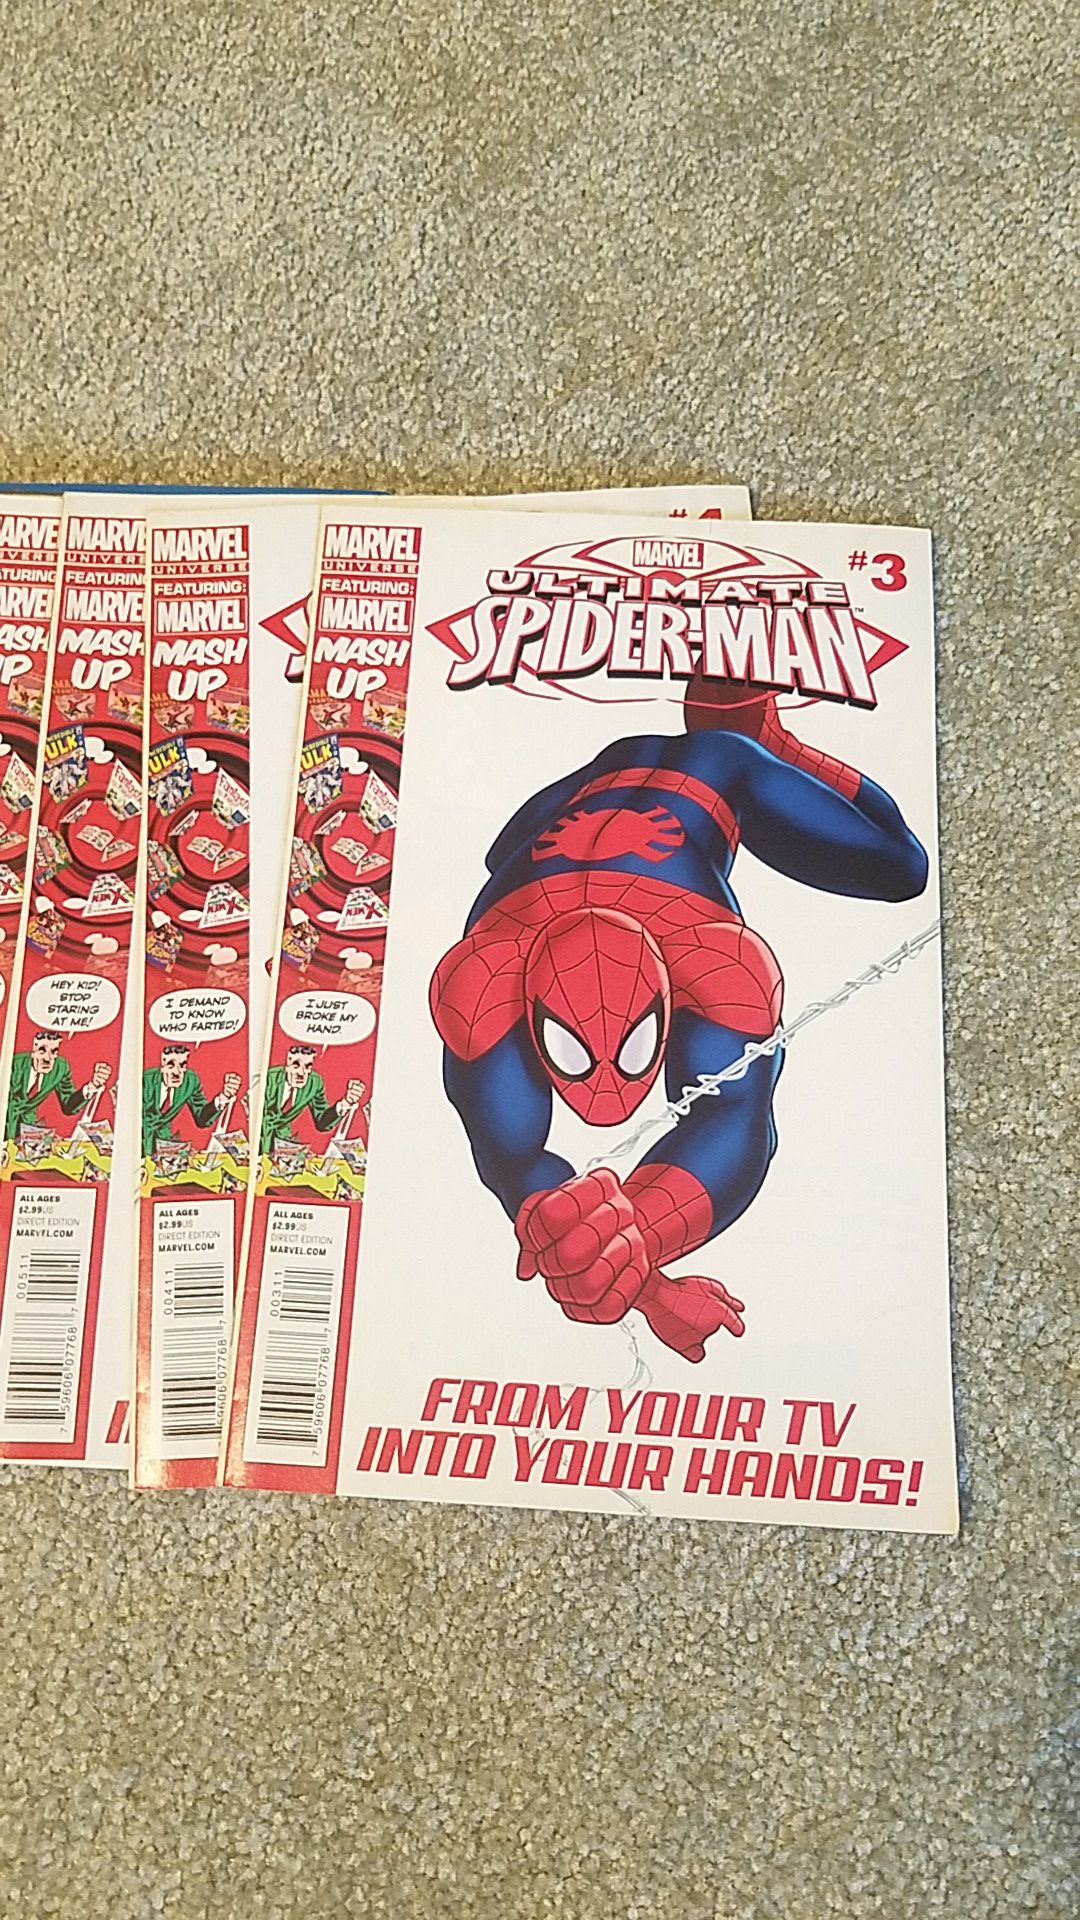 29 ULTIMATE SPIDER-MAN comic books